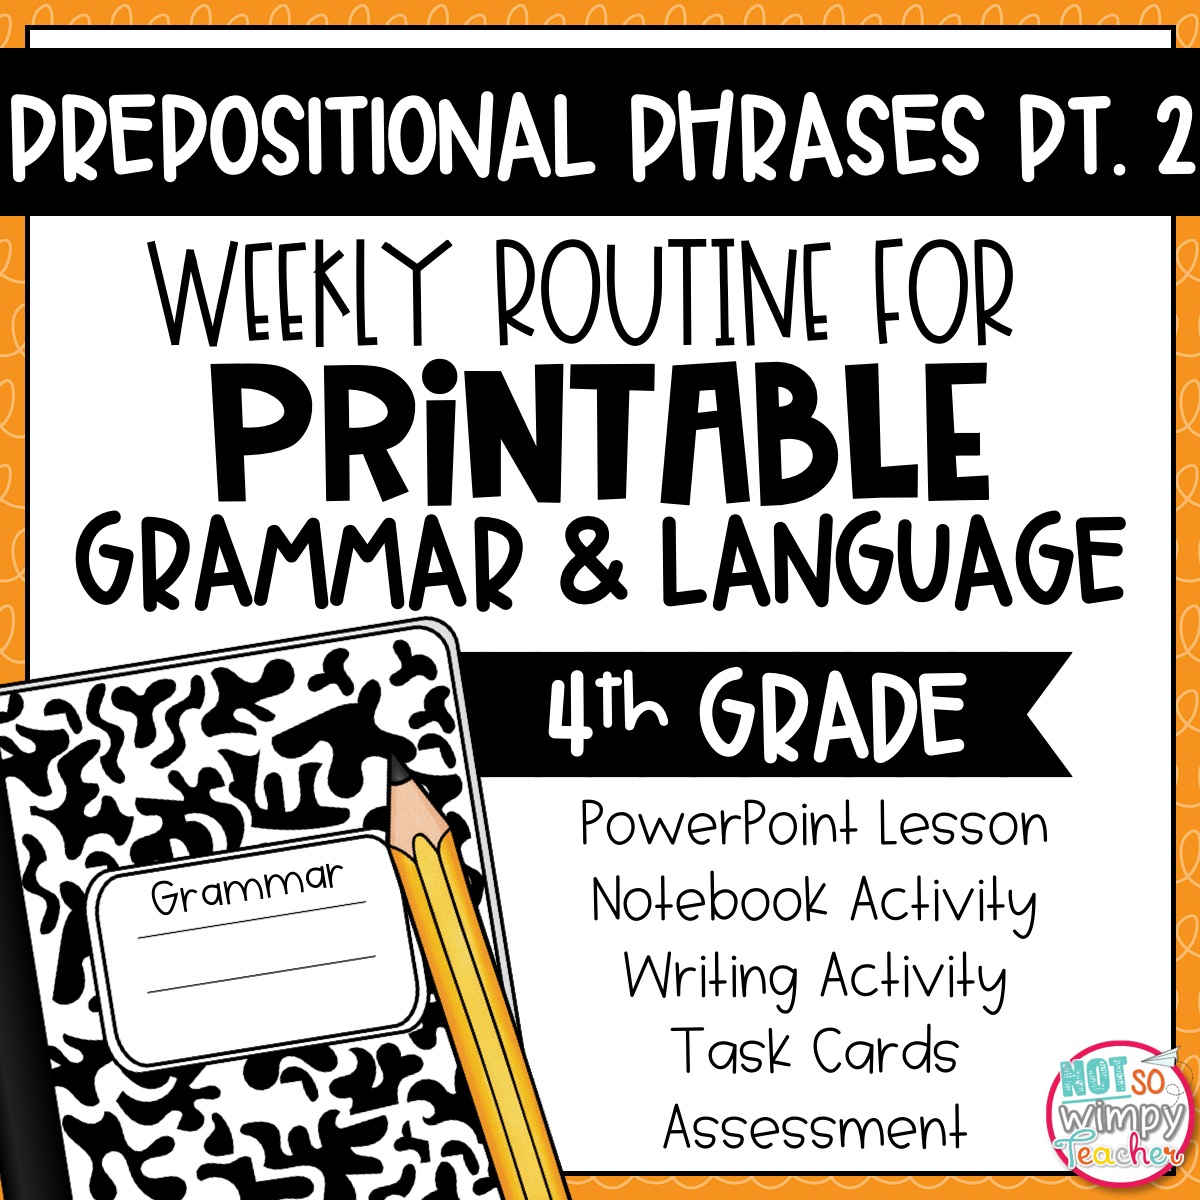 grammar-fourth-grade-activities-prepositional-phrases-pt-2-not-so-wimpy-teacher